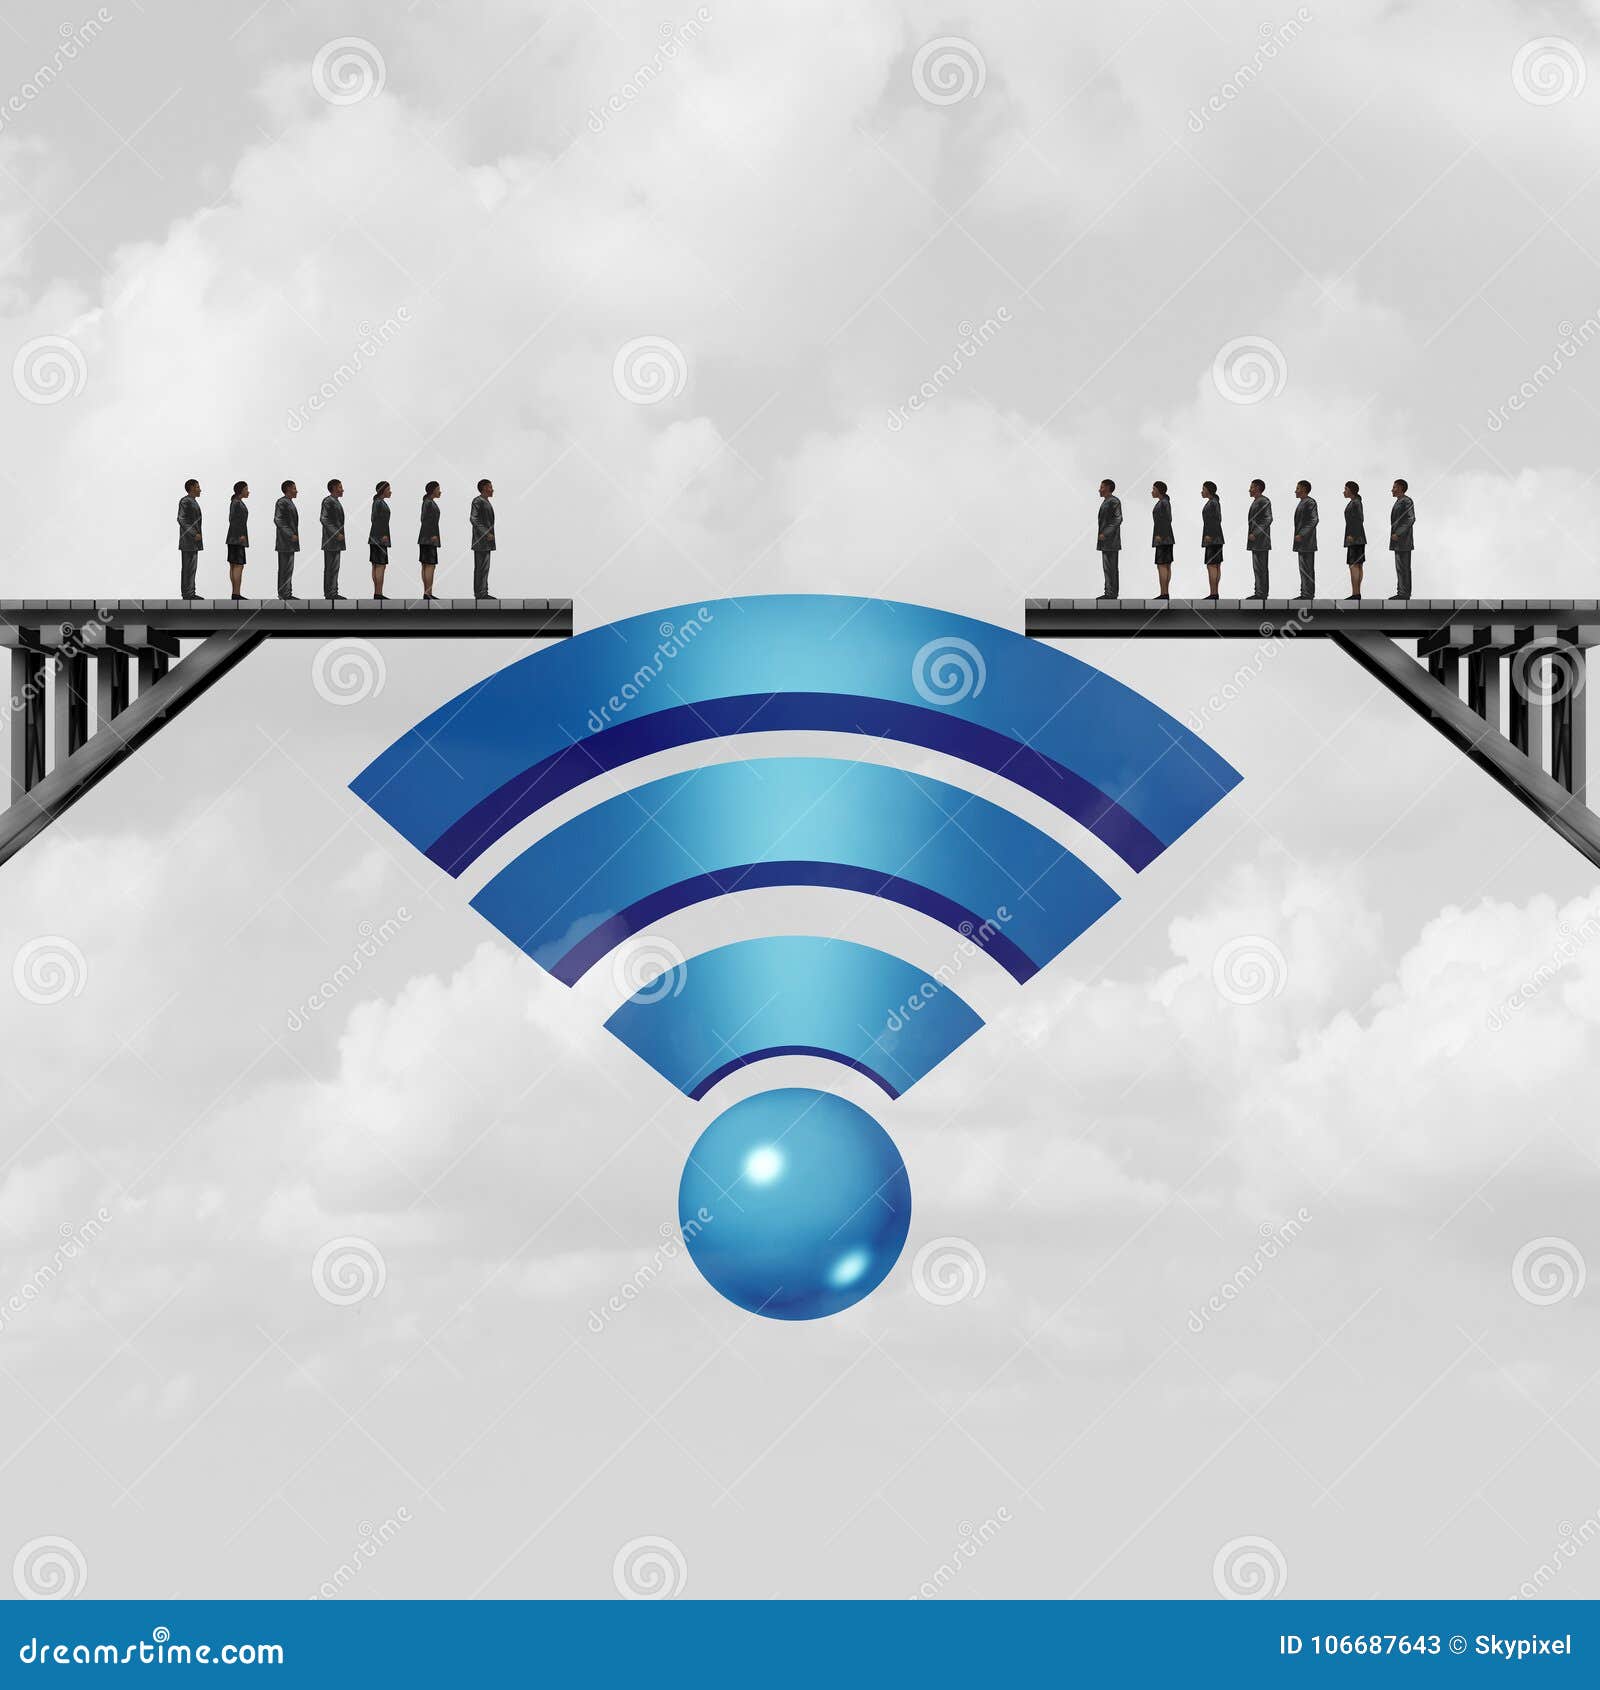 internet connectivity communication